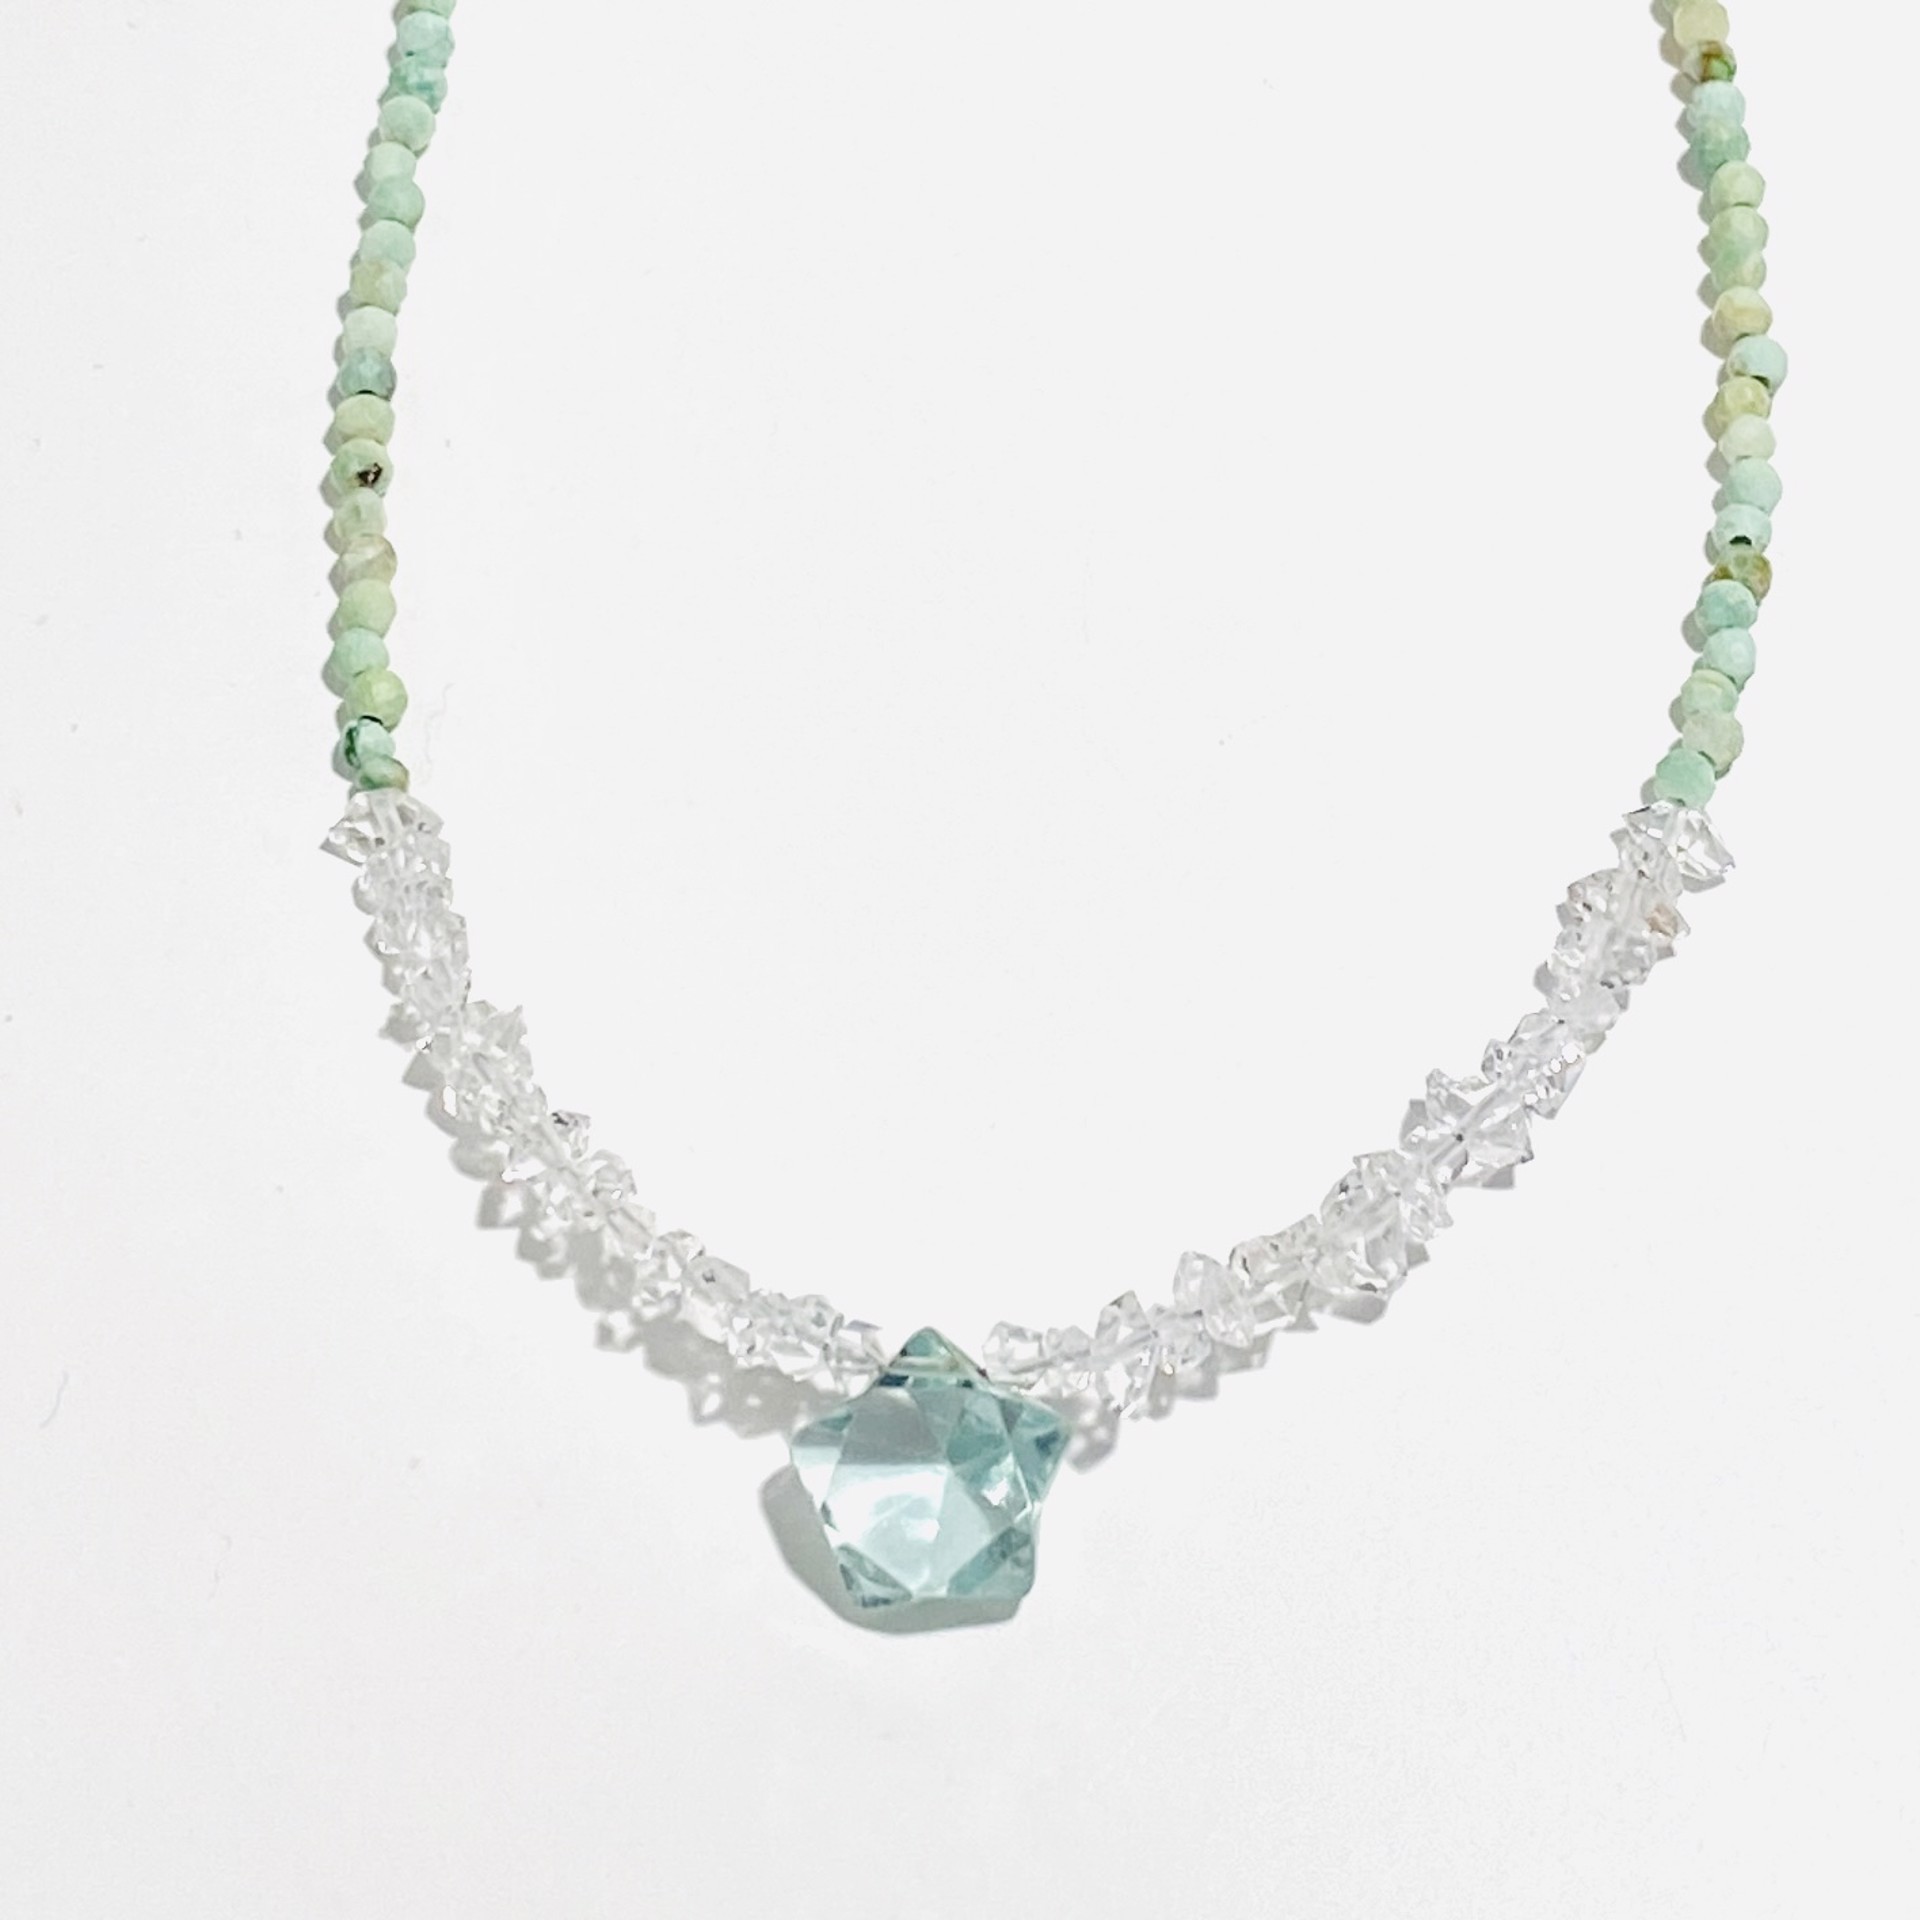 Tiny Green Turquoise Herkimer Diamond Aqua Quartz Star Necklace by Nance Trueworthy